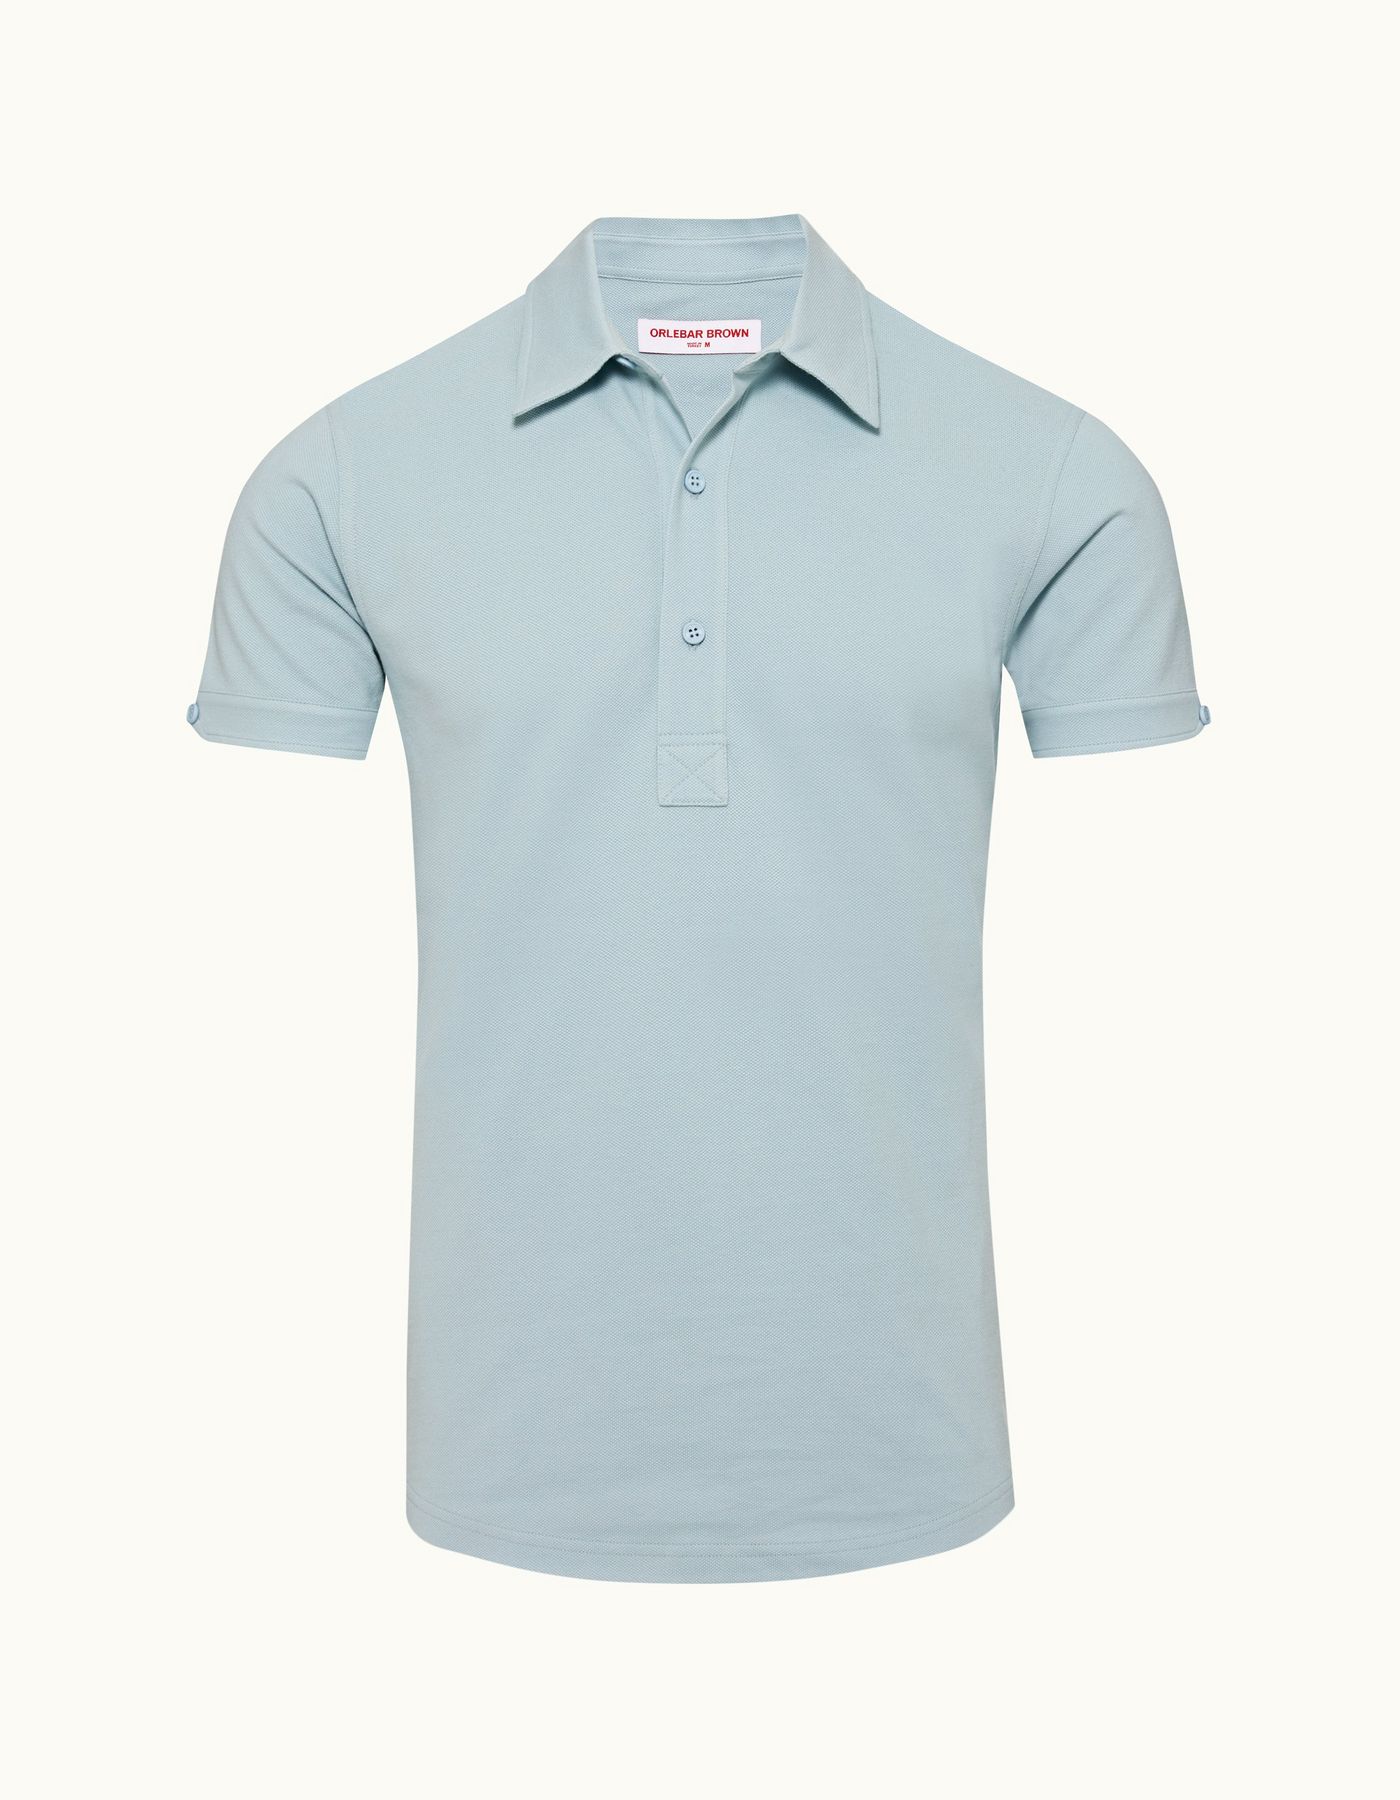 Sebastian - Mens Powdered Sky Tailored Fit Short-Sleeve Cotton Polo Shirt